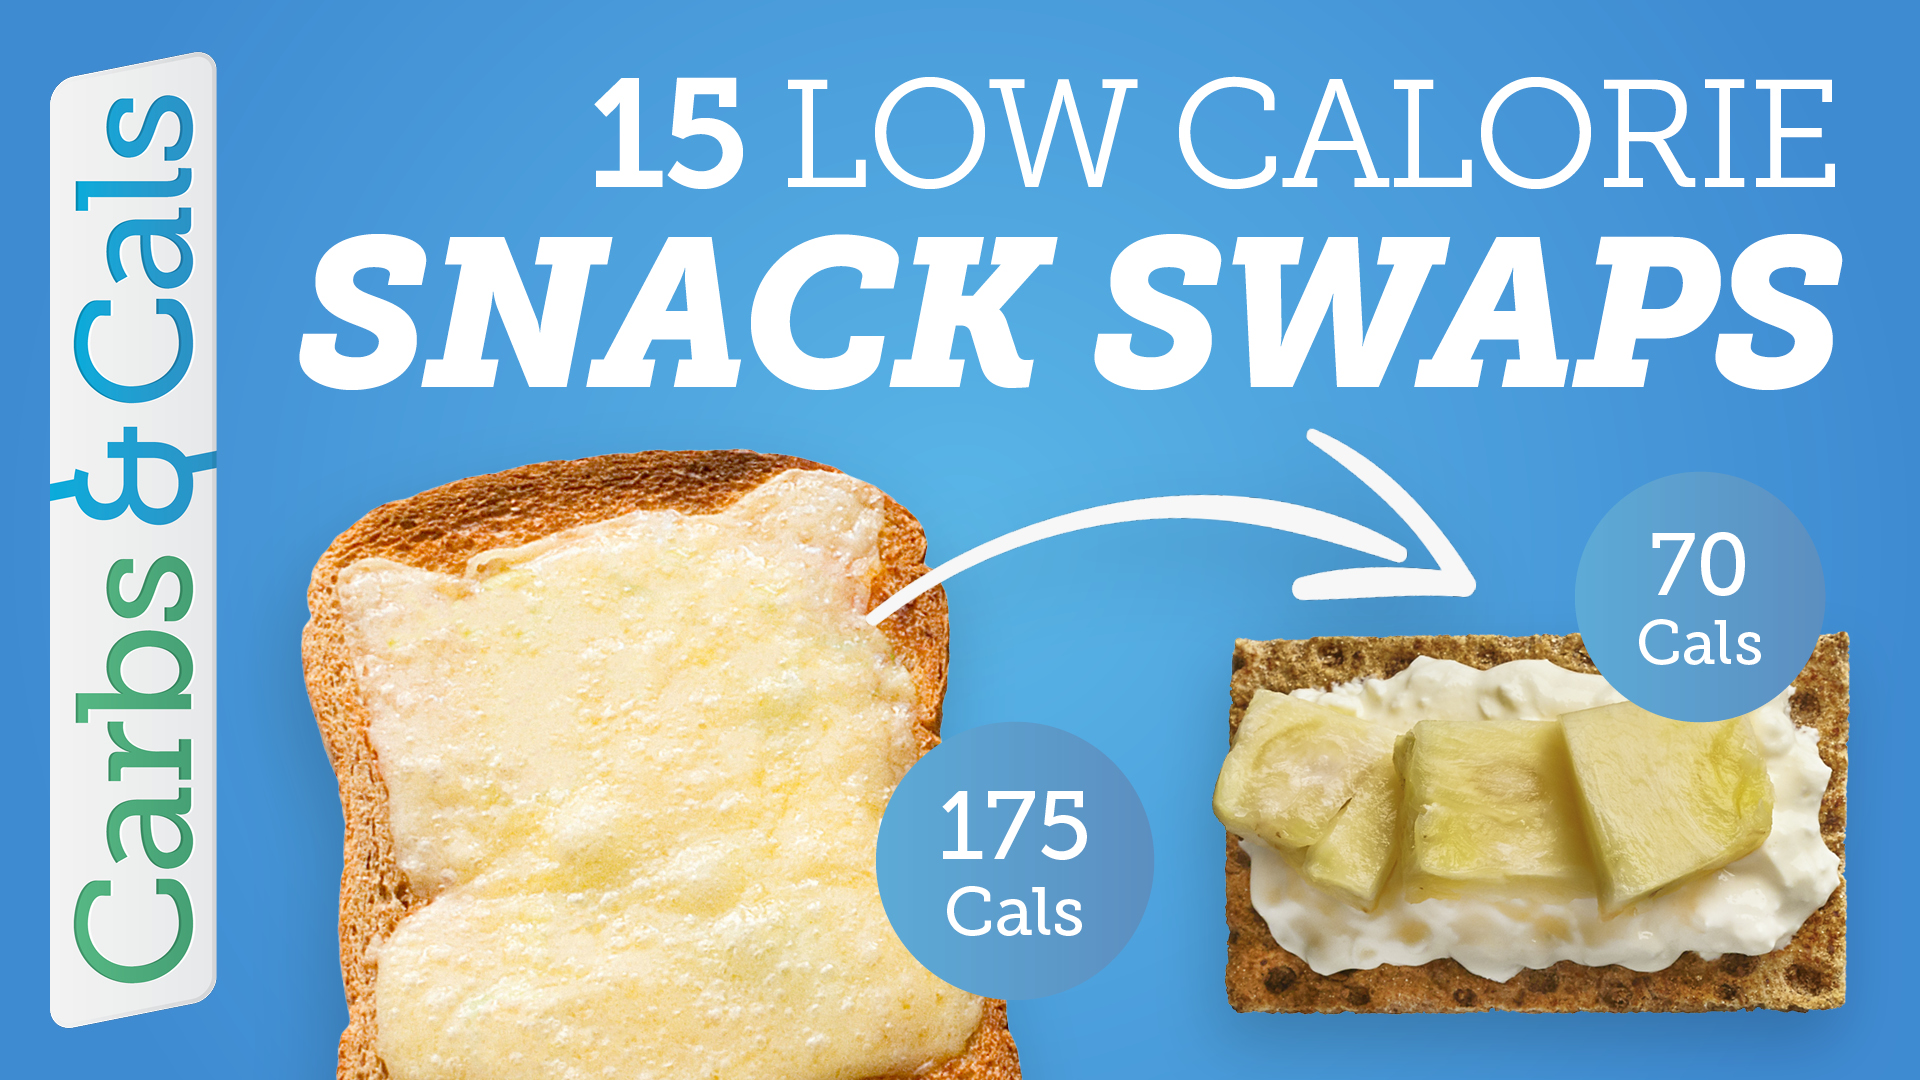 Video - Low Calorie Snack Swaps